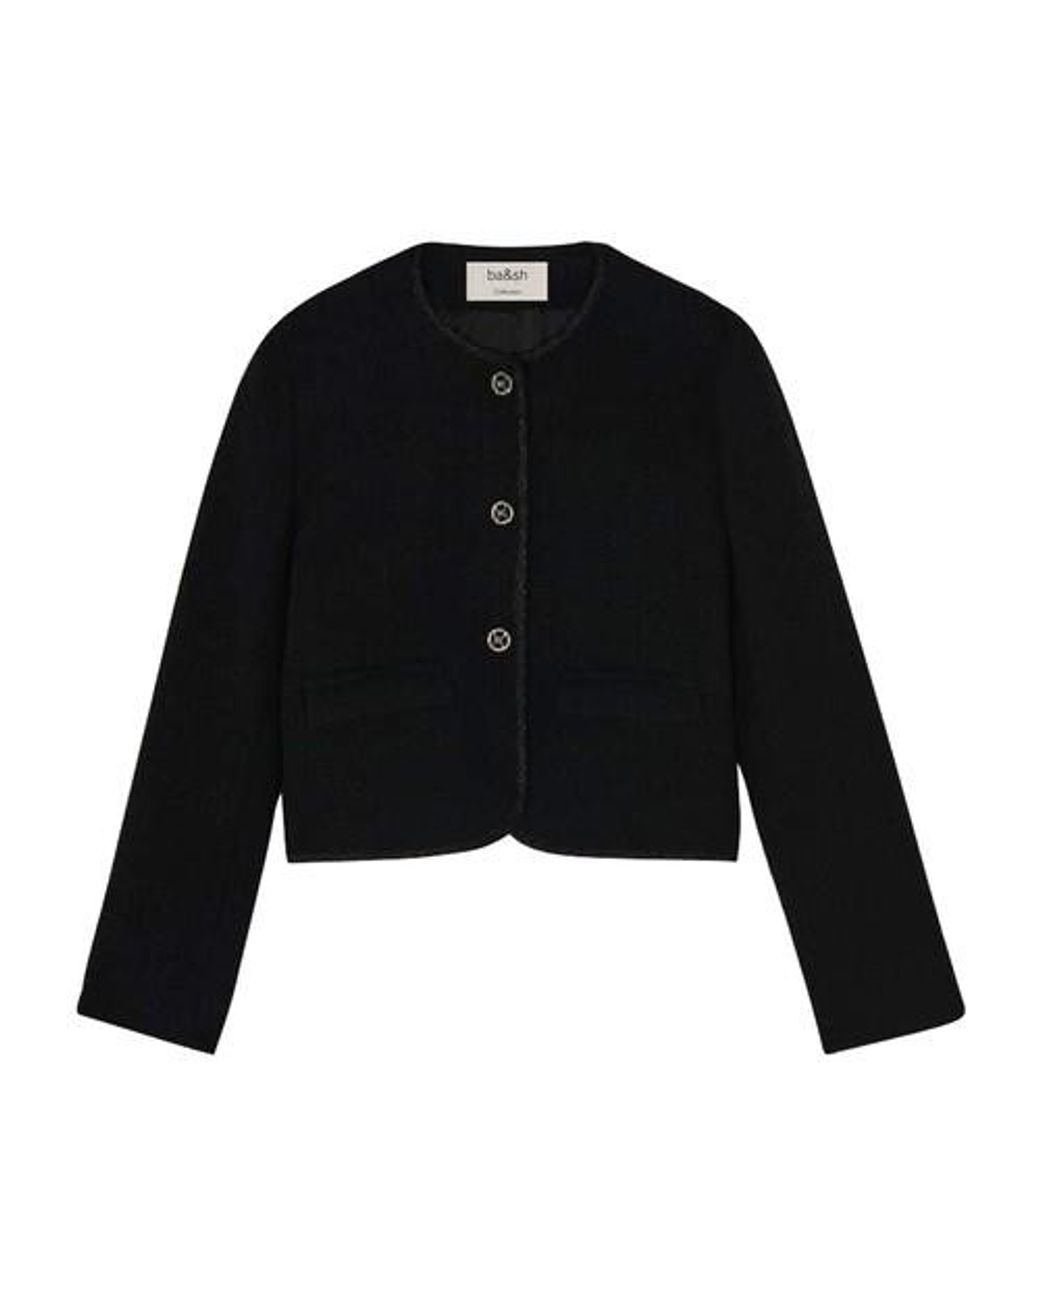 Ba&sh Momy Jacket in Black | Lyst UK